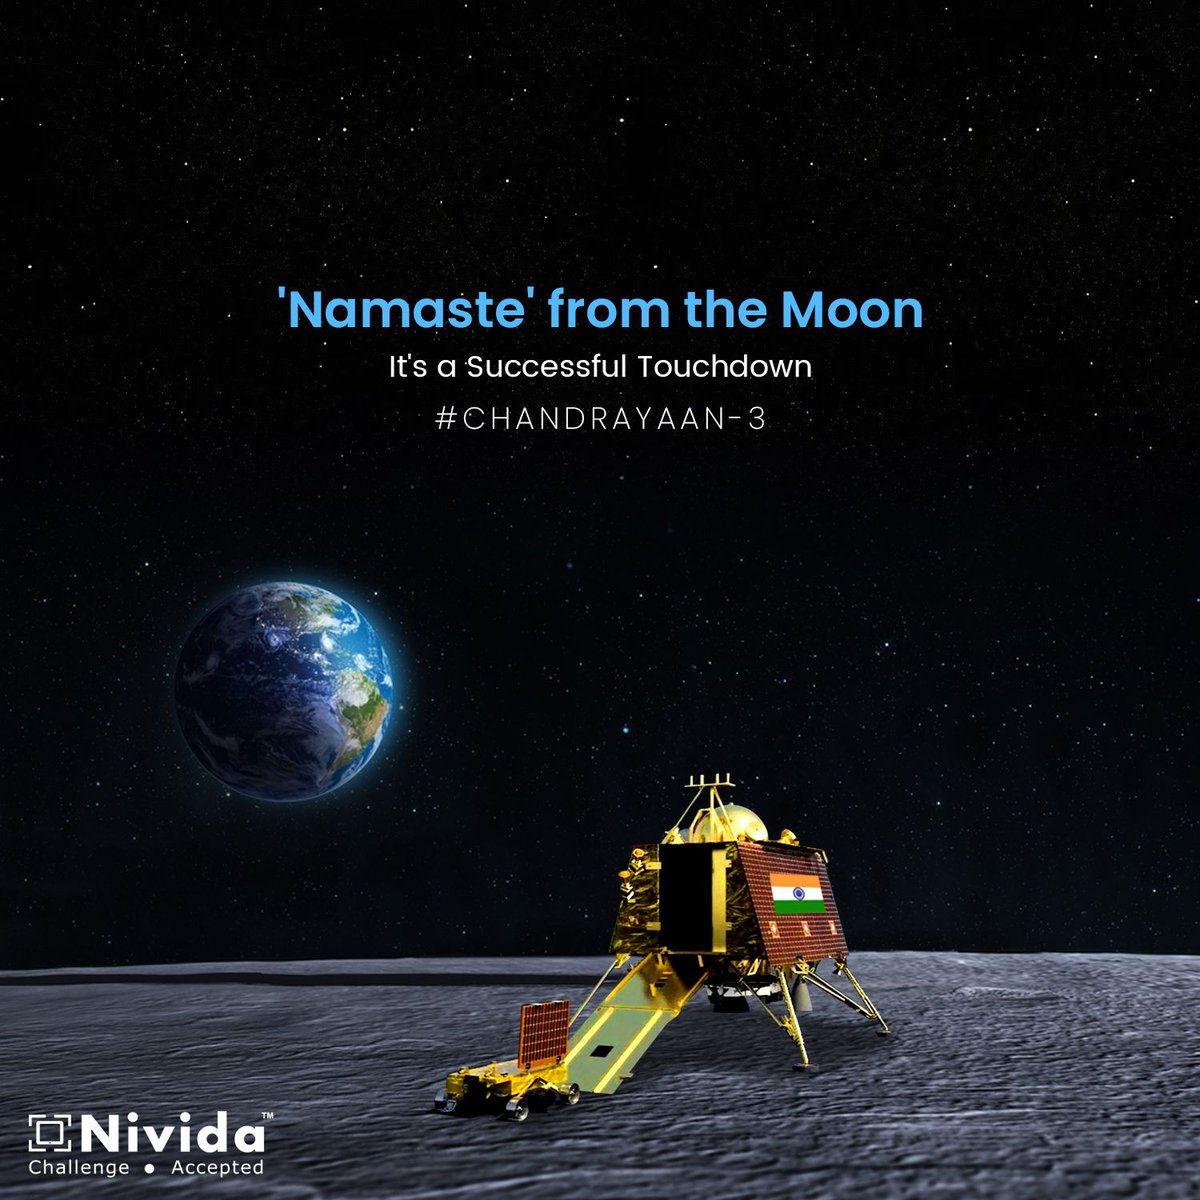 #moon #ISRO #chandrayaan3 #chandrayaan3launch #vikramlander #missionmoon #LunarExploration #SpaceVoyage #ExploringOuterSpace #ISROAchievements #indiainspace #proudmoment #indianspaceprogram #ISROSuccess #spaceexploration #scienceandtechnology #isromissions #chandrayaan3live